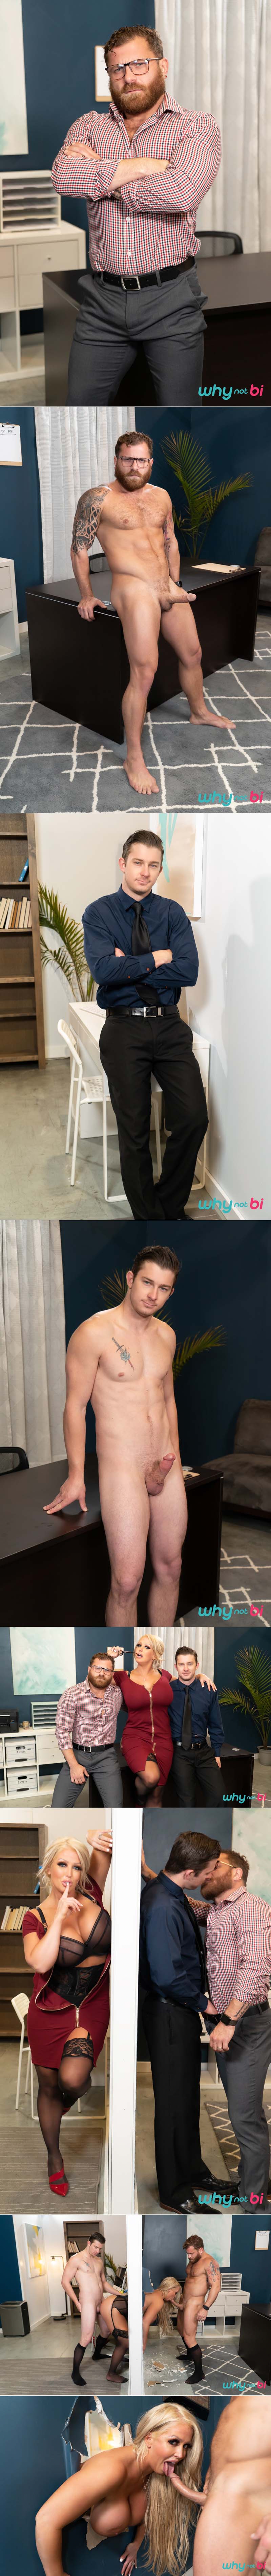 Bisexual Breakthru (Nathan Styles, Riley Mitchel and Alura Jenson) at WhyNotBi